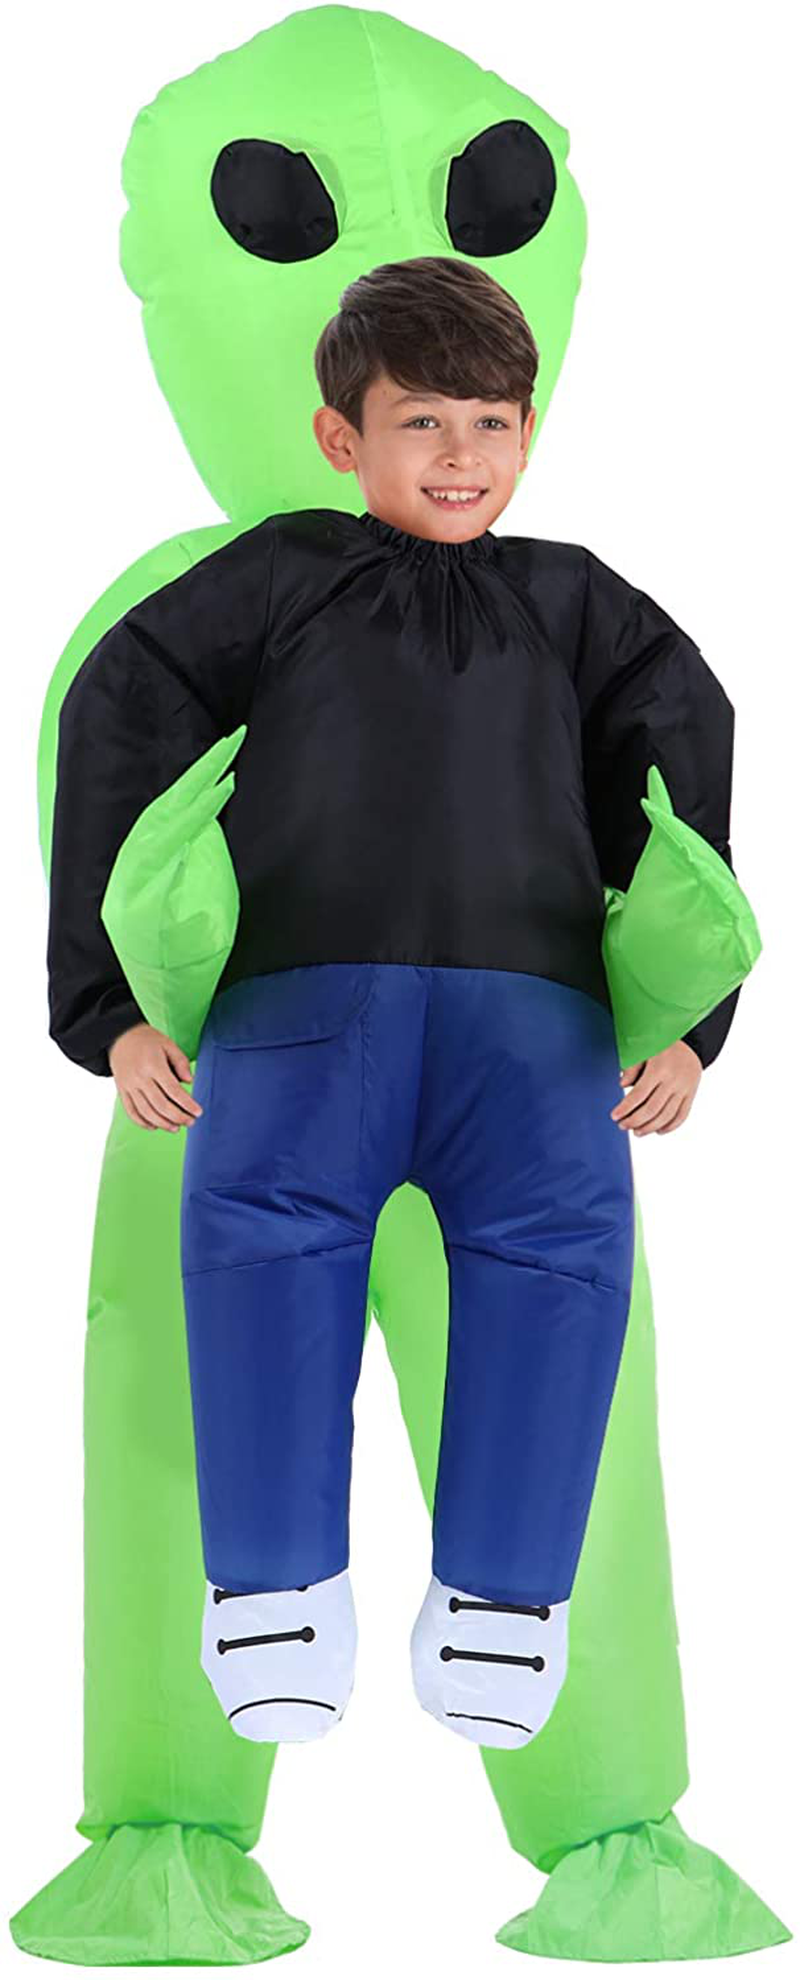 TOLOCO Inflatable Costume for Kid, Inflatable Alien Costume Kids, Alie